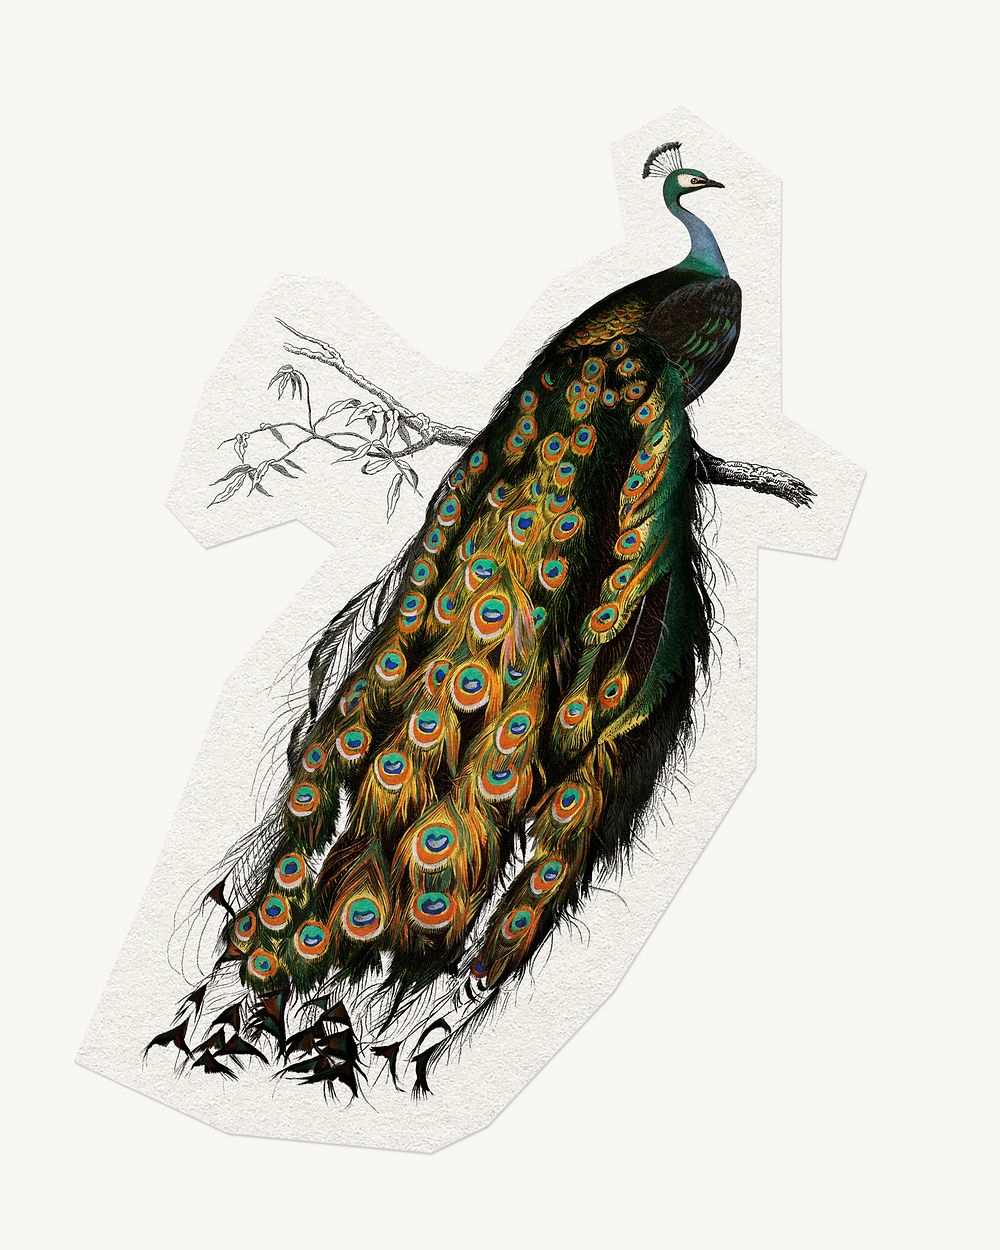 Peacock, bird animal clipart sticker, paper craft collage element